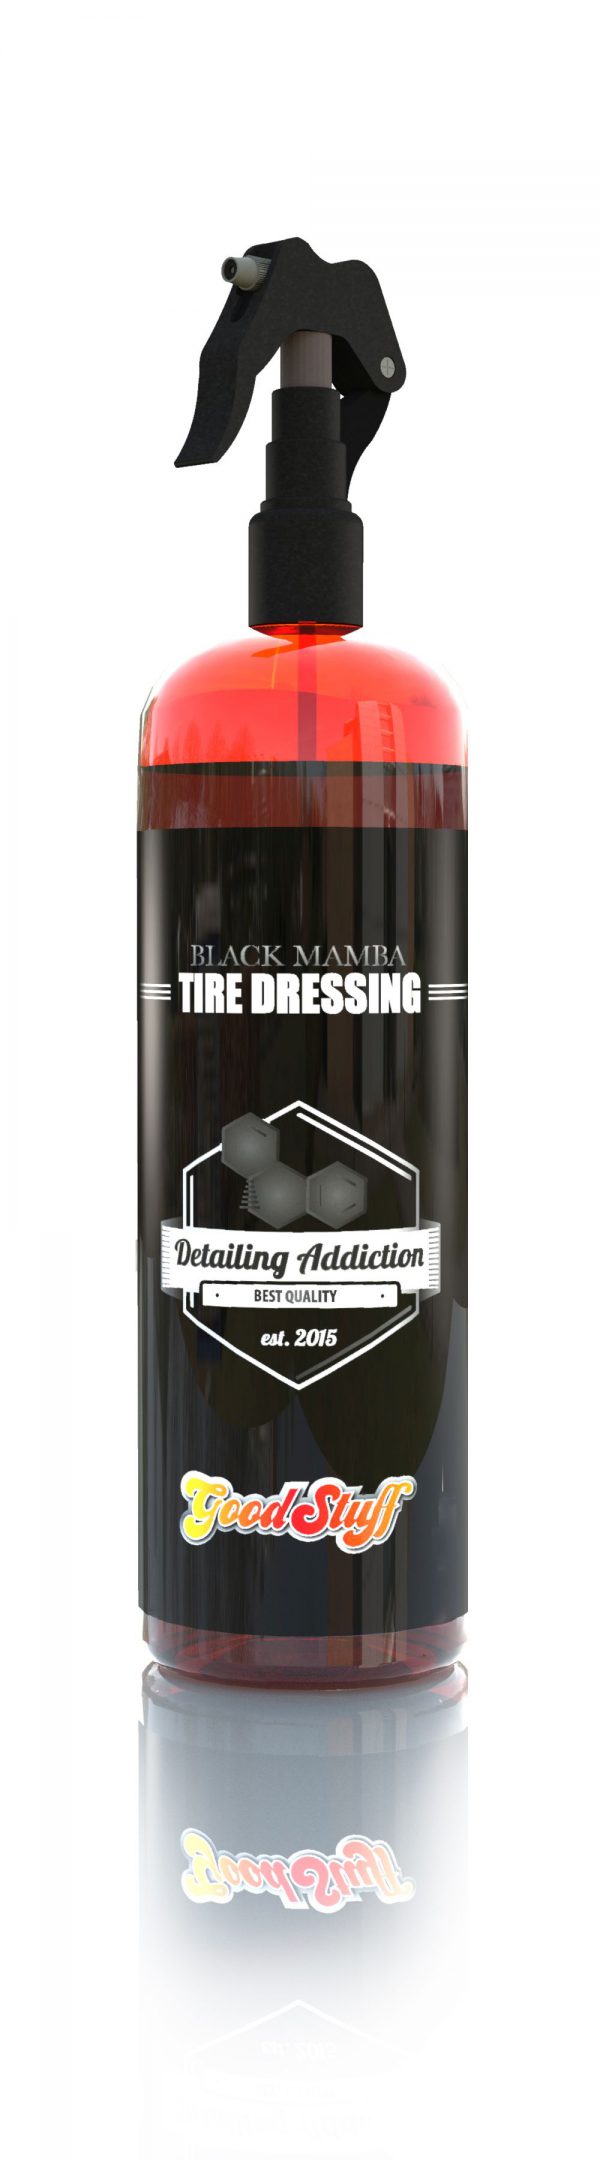 Good Stuff Black Mamba Tire Dressing - matowy dressing do opon 500 ml